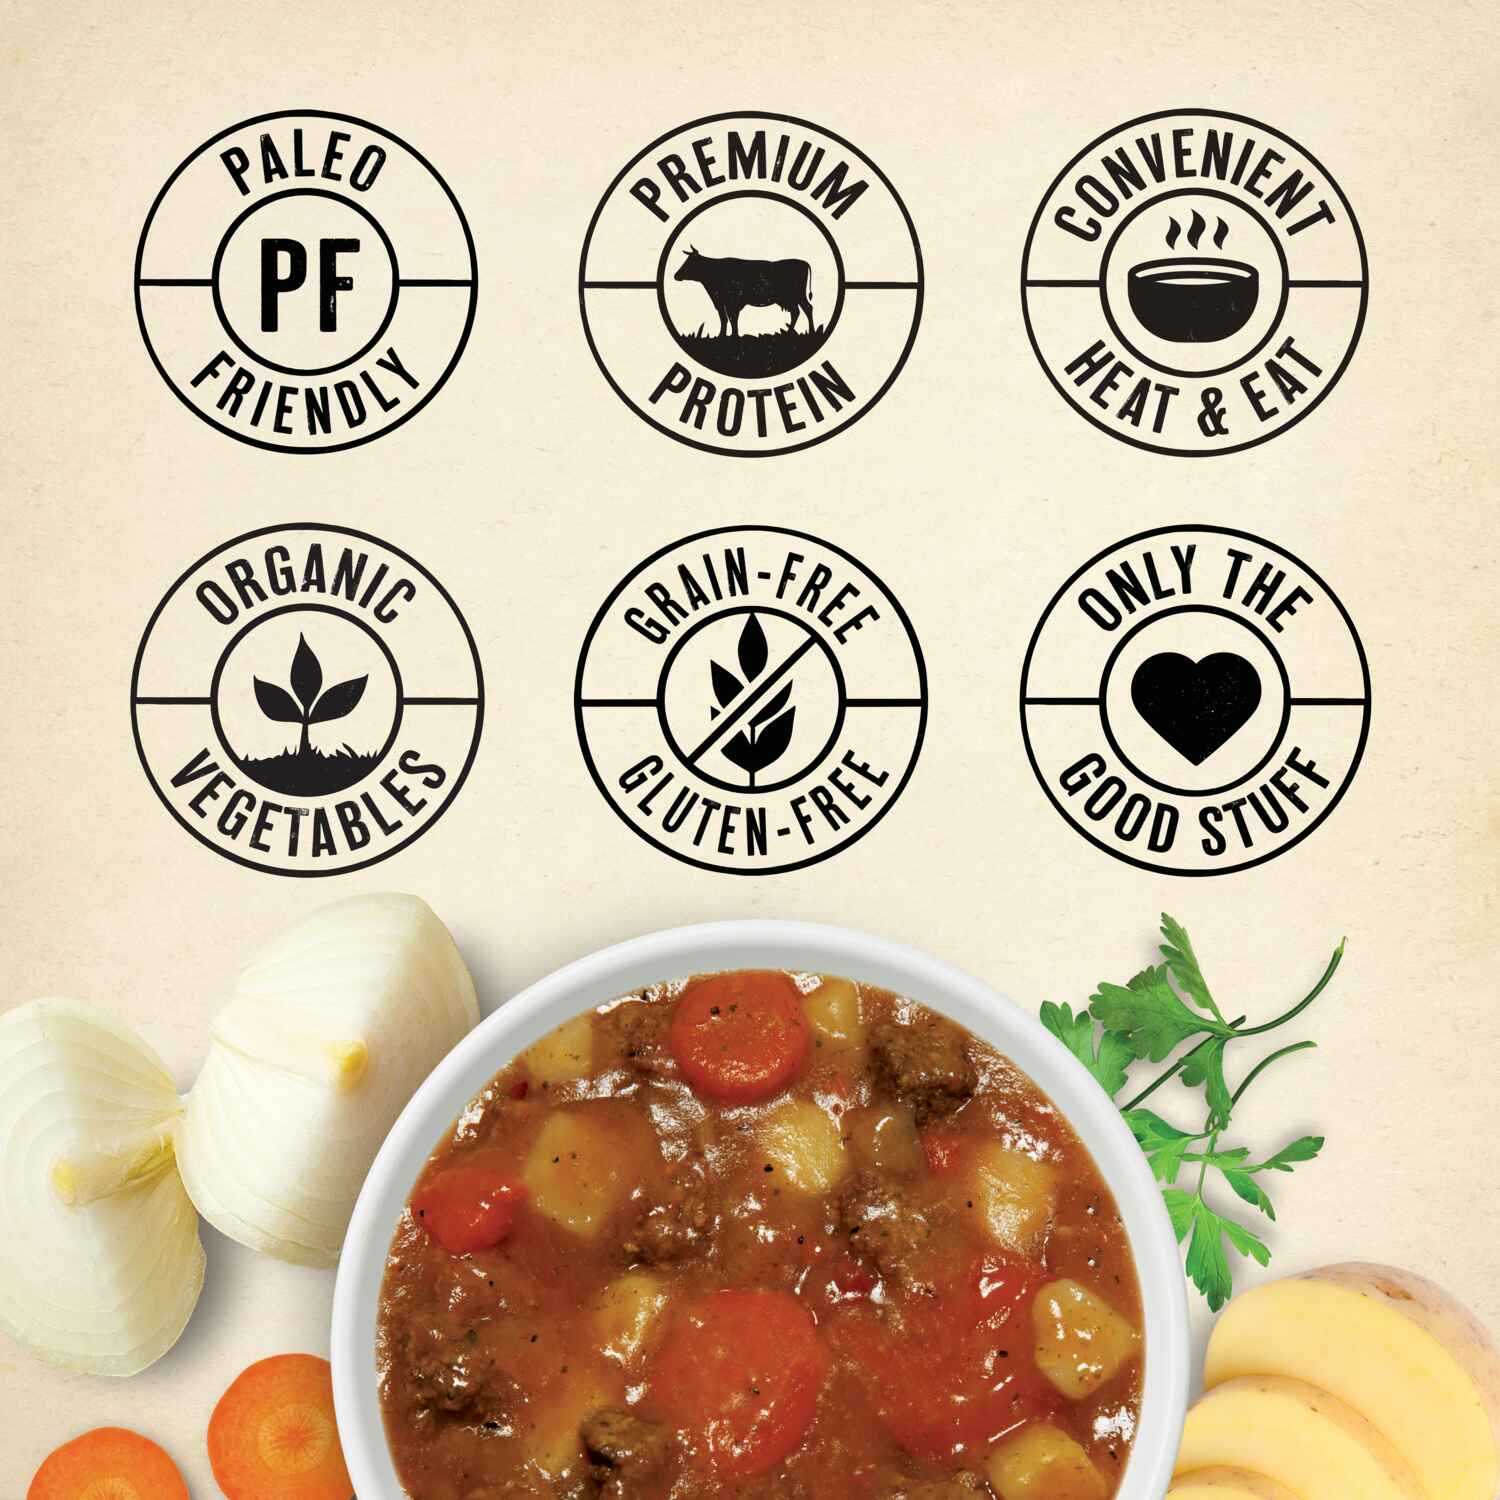 True Primal Beef & Potato Soup benefits